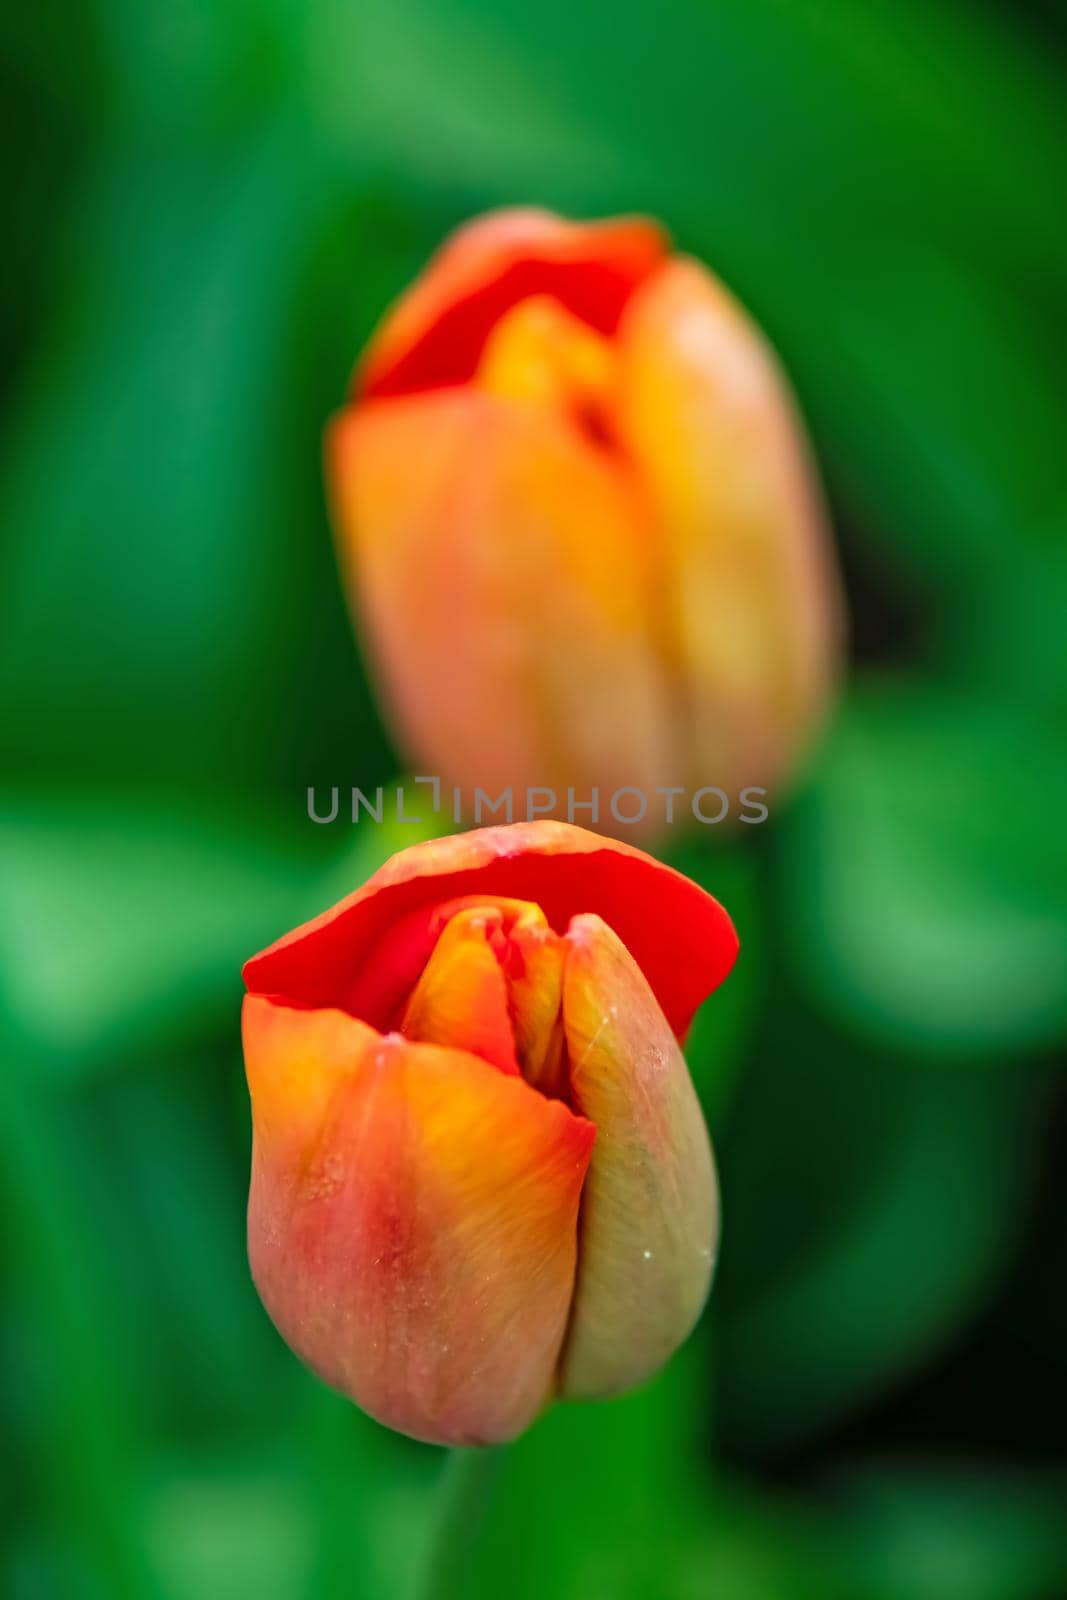 tulip flowers in april and spring season by yilmazsavaskandag